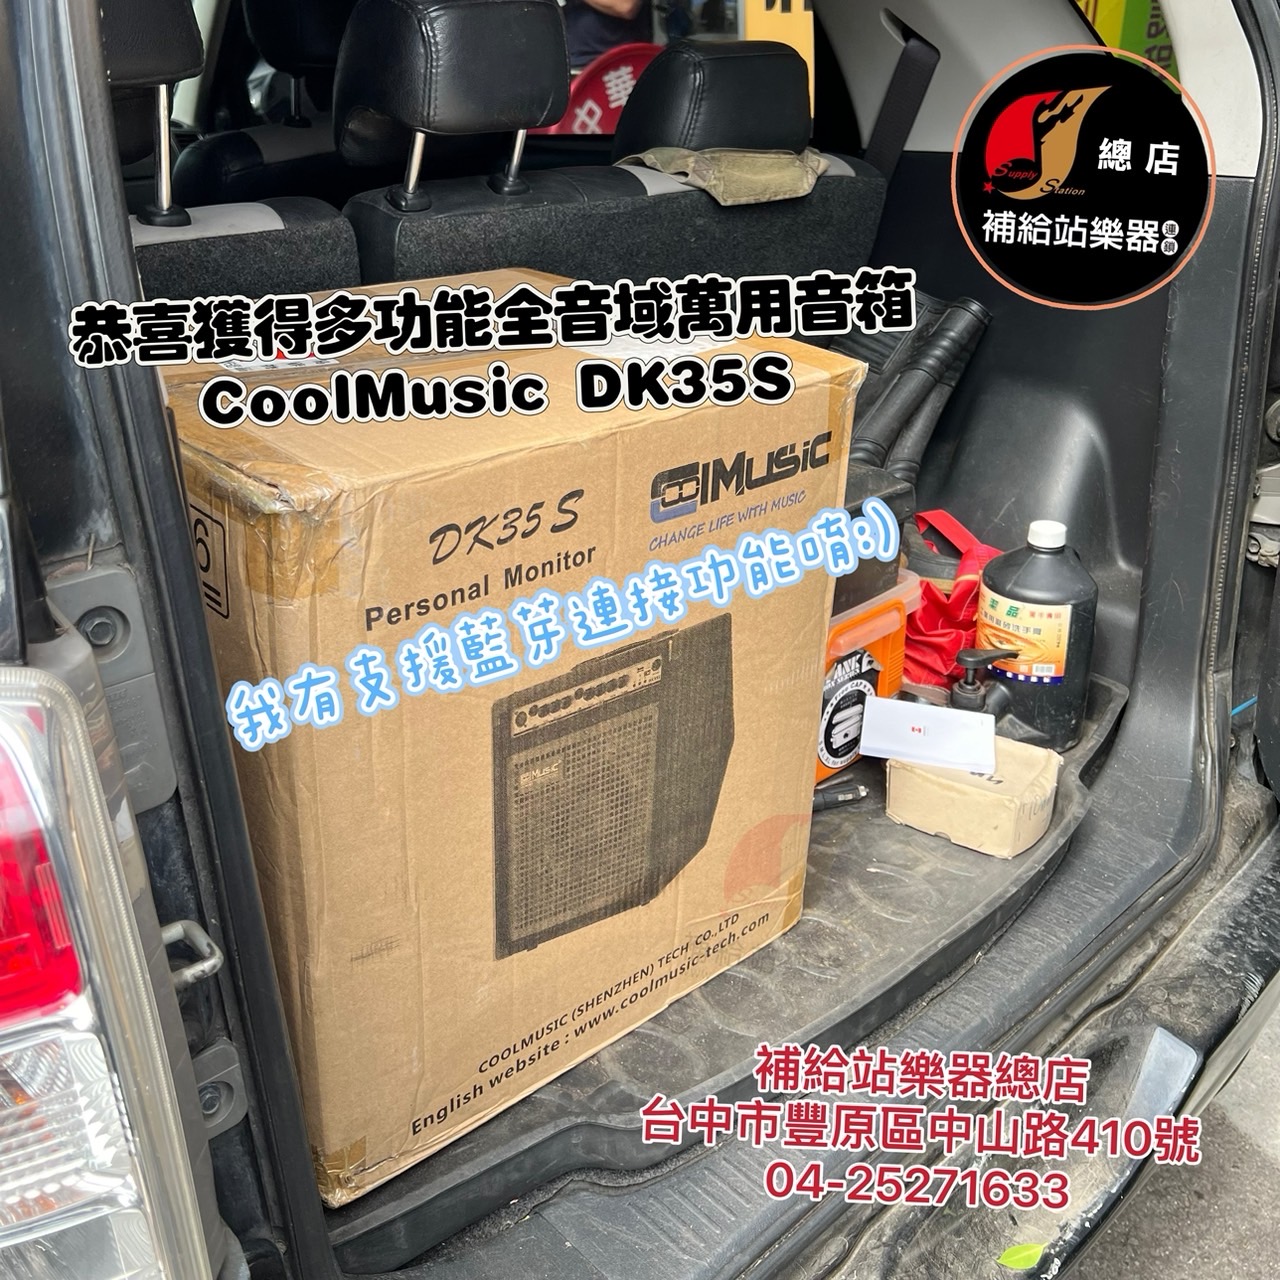 Coolmusic-DK35S